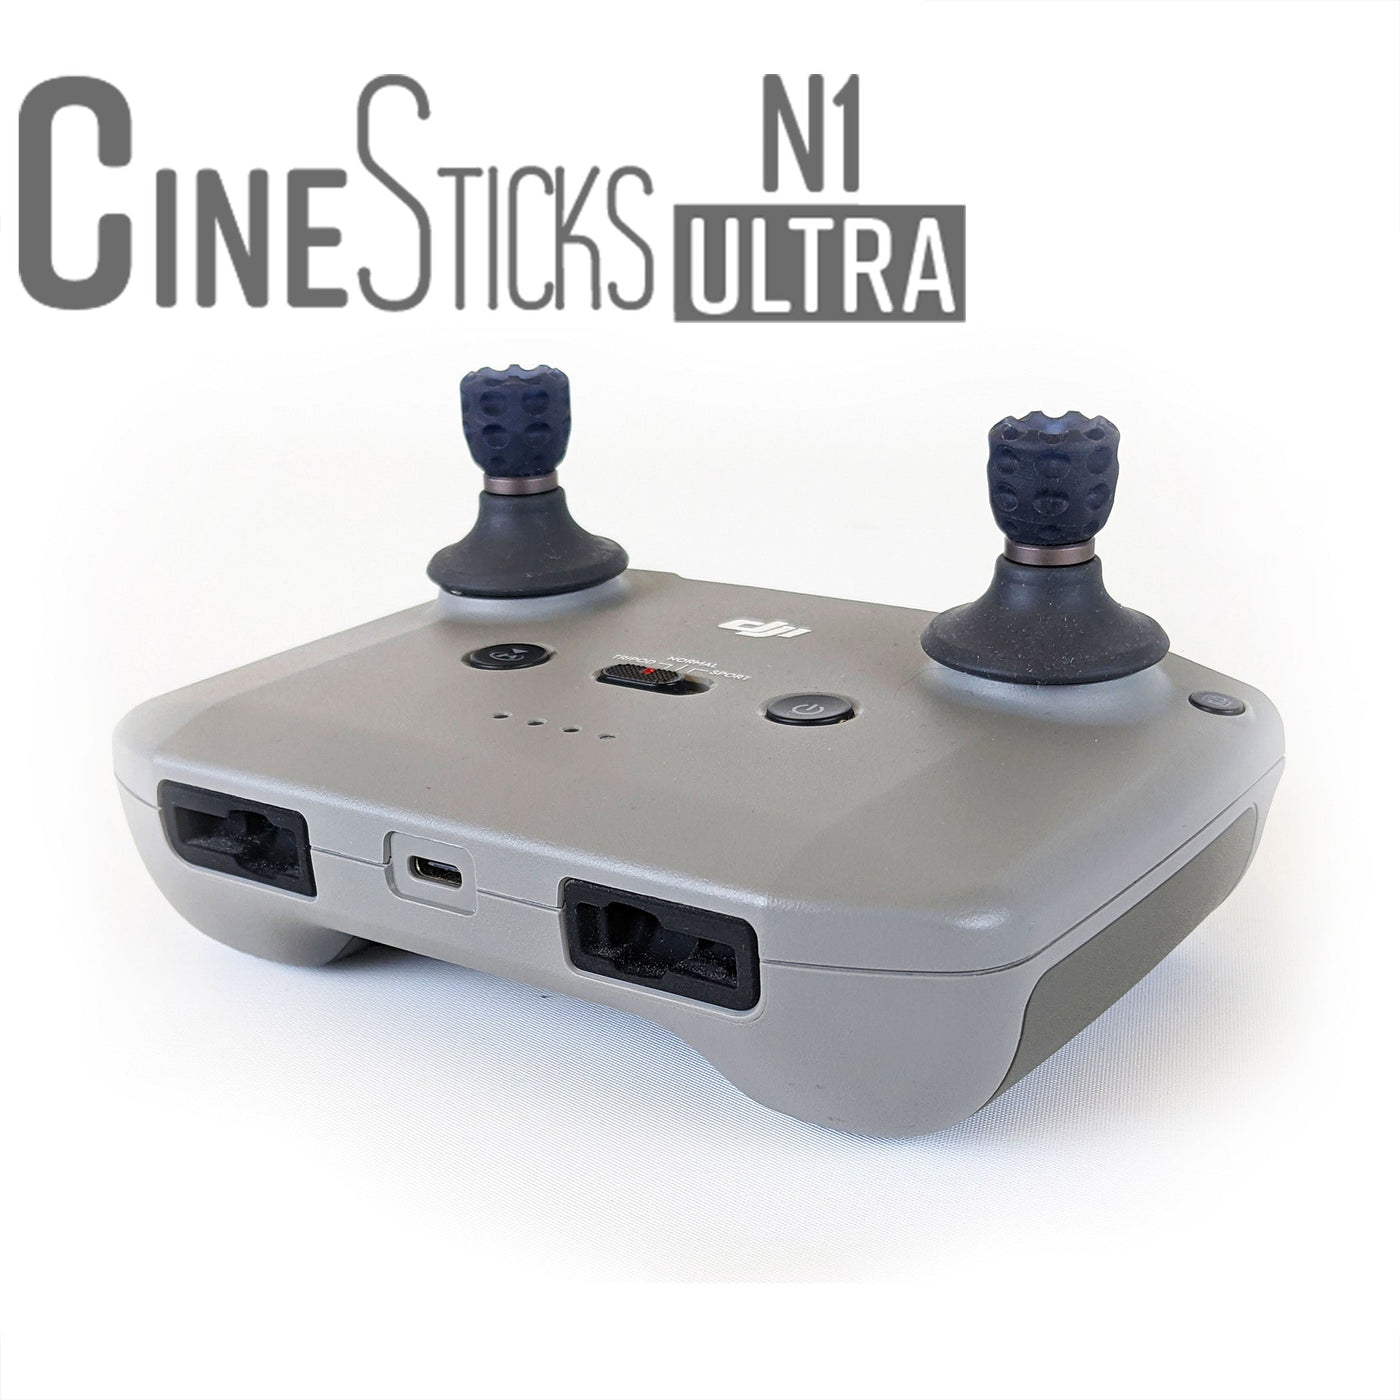 CineSticks N1 Ultra - UK